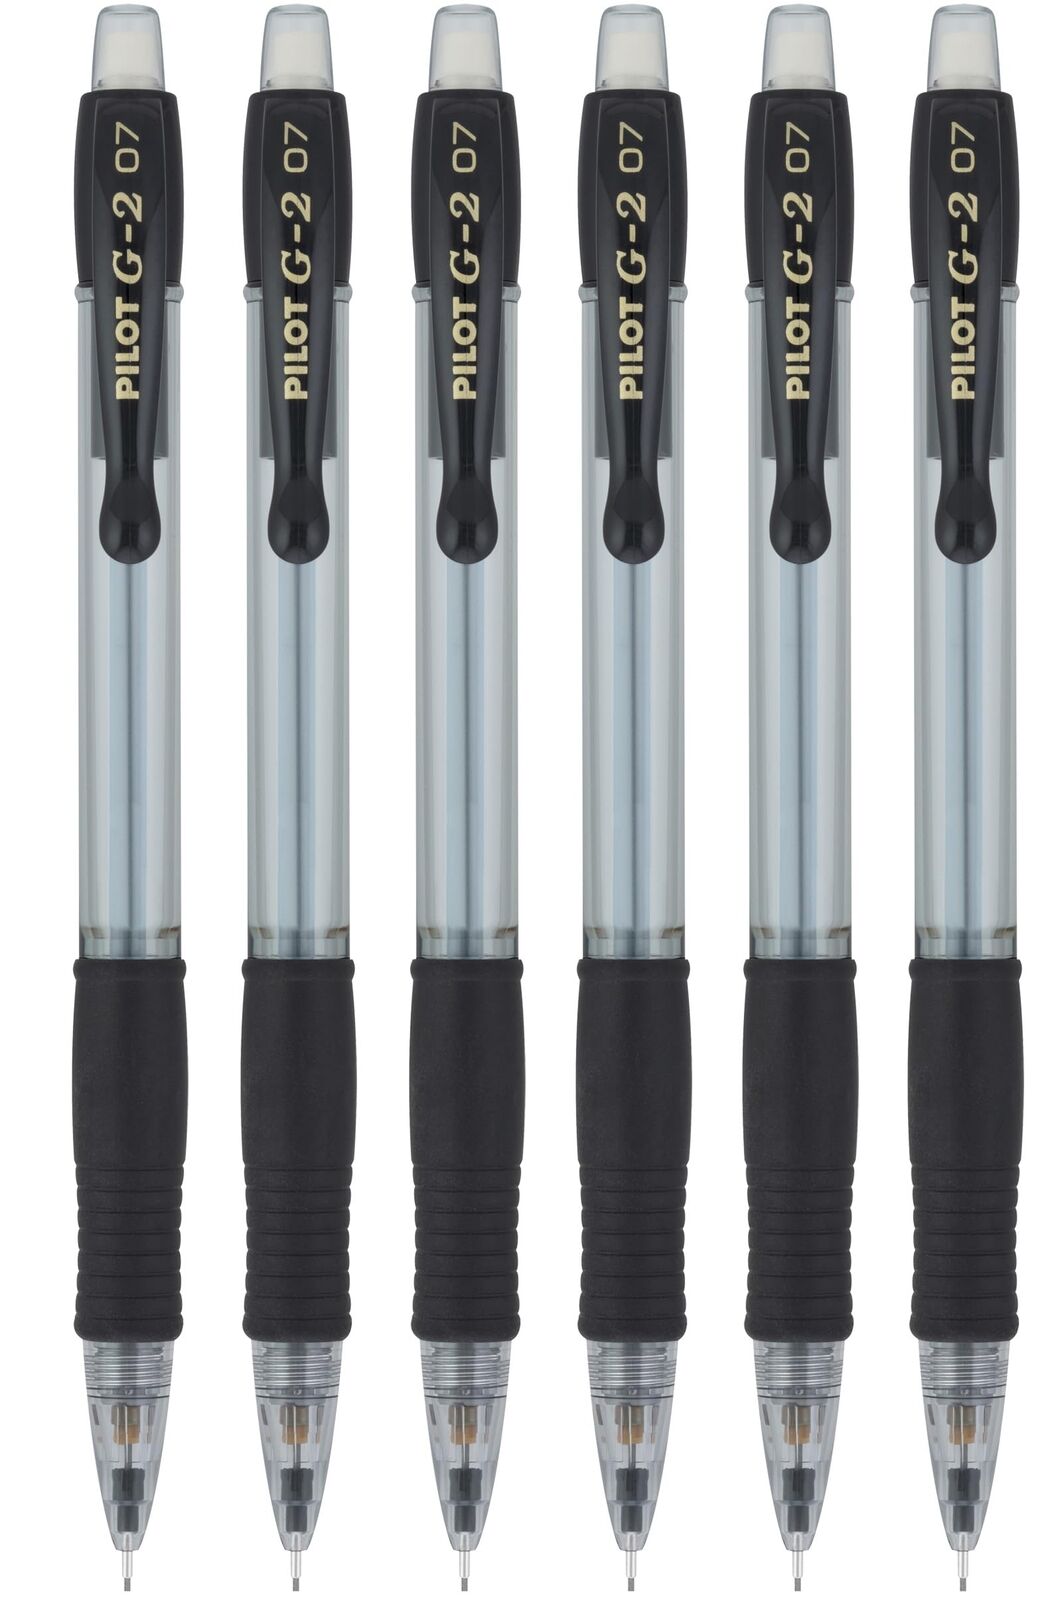 Pilot G2 Mechanical Pencils, 0.7mm HB Lead, Black/Clear Barrels, 6 Pack